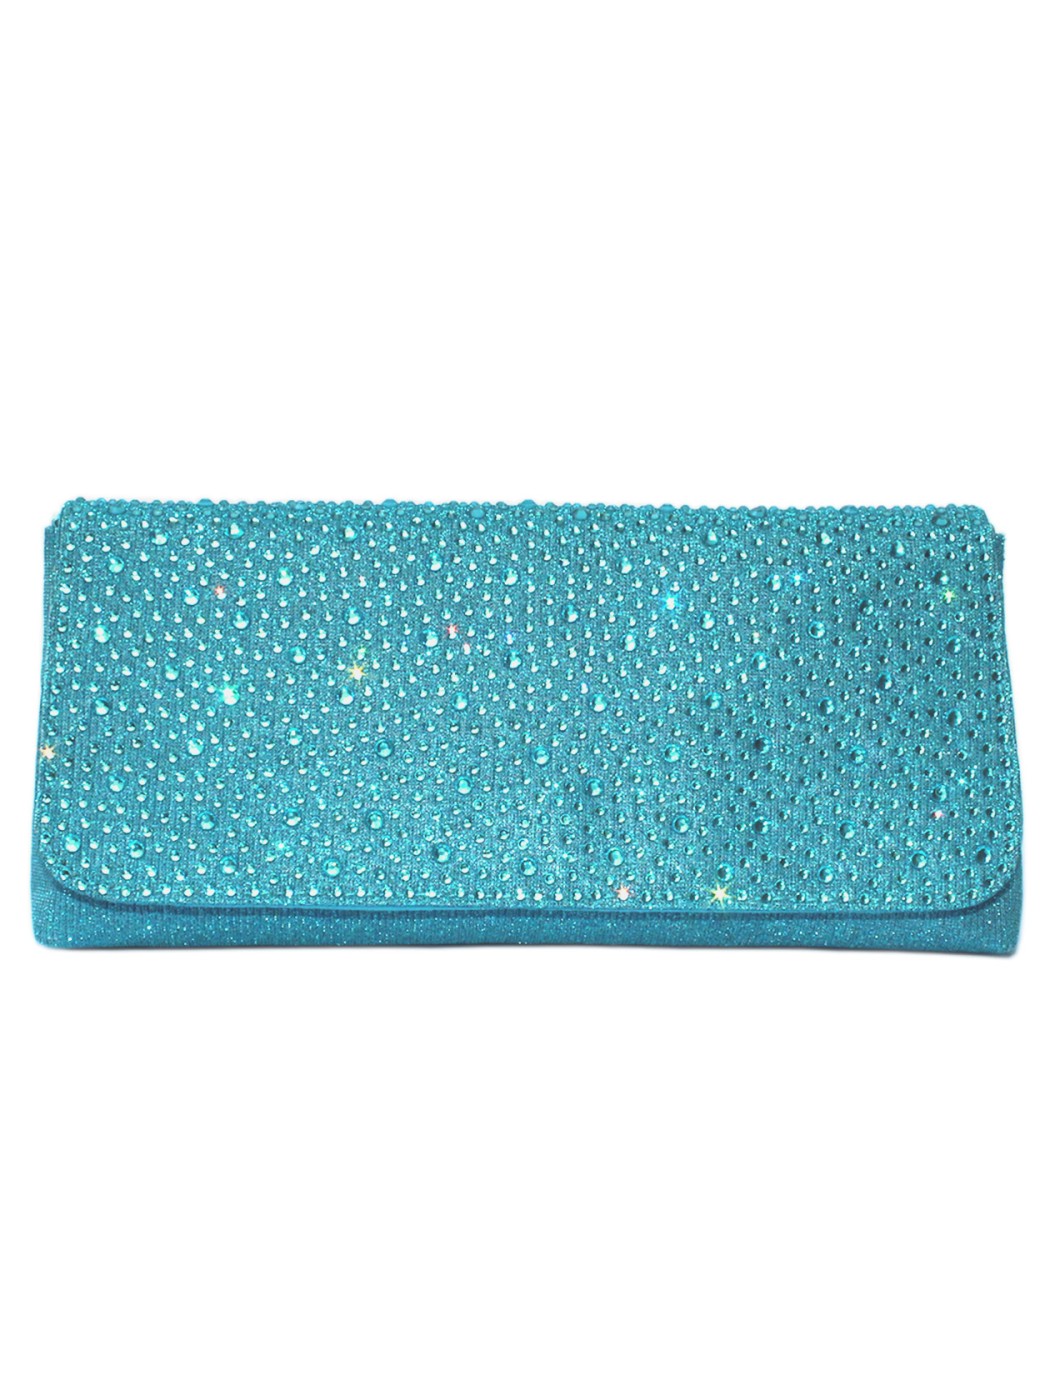 Lurex turquoise silk purse...